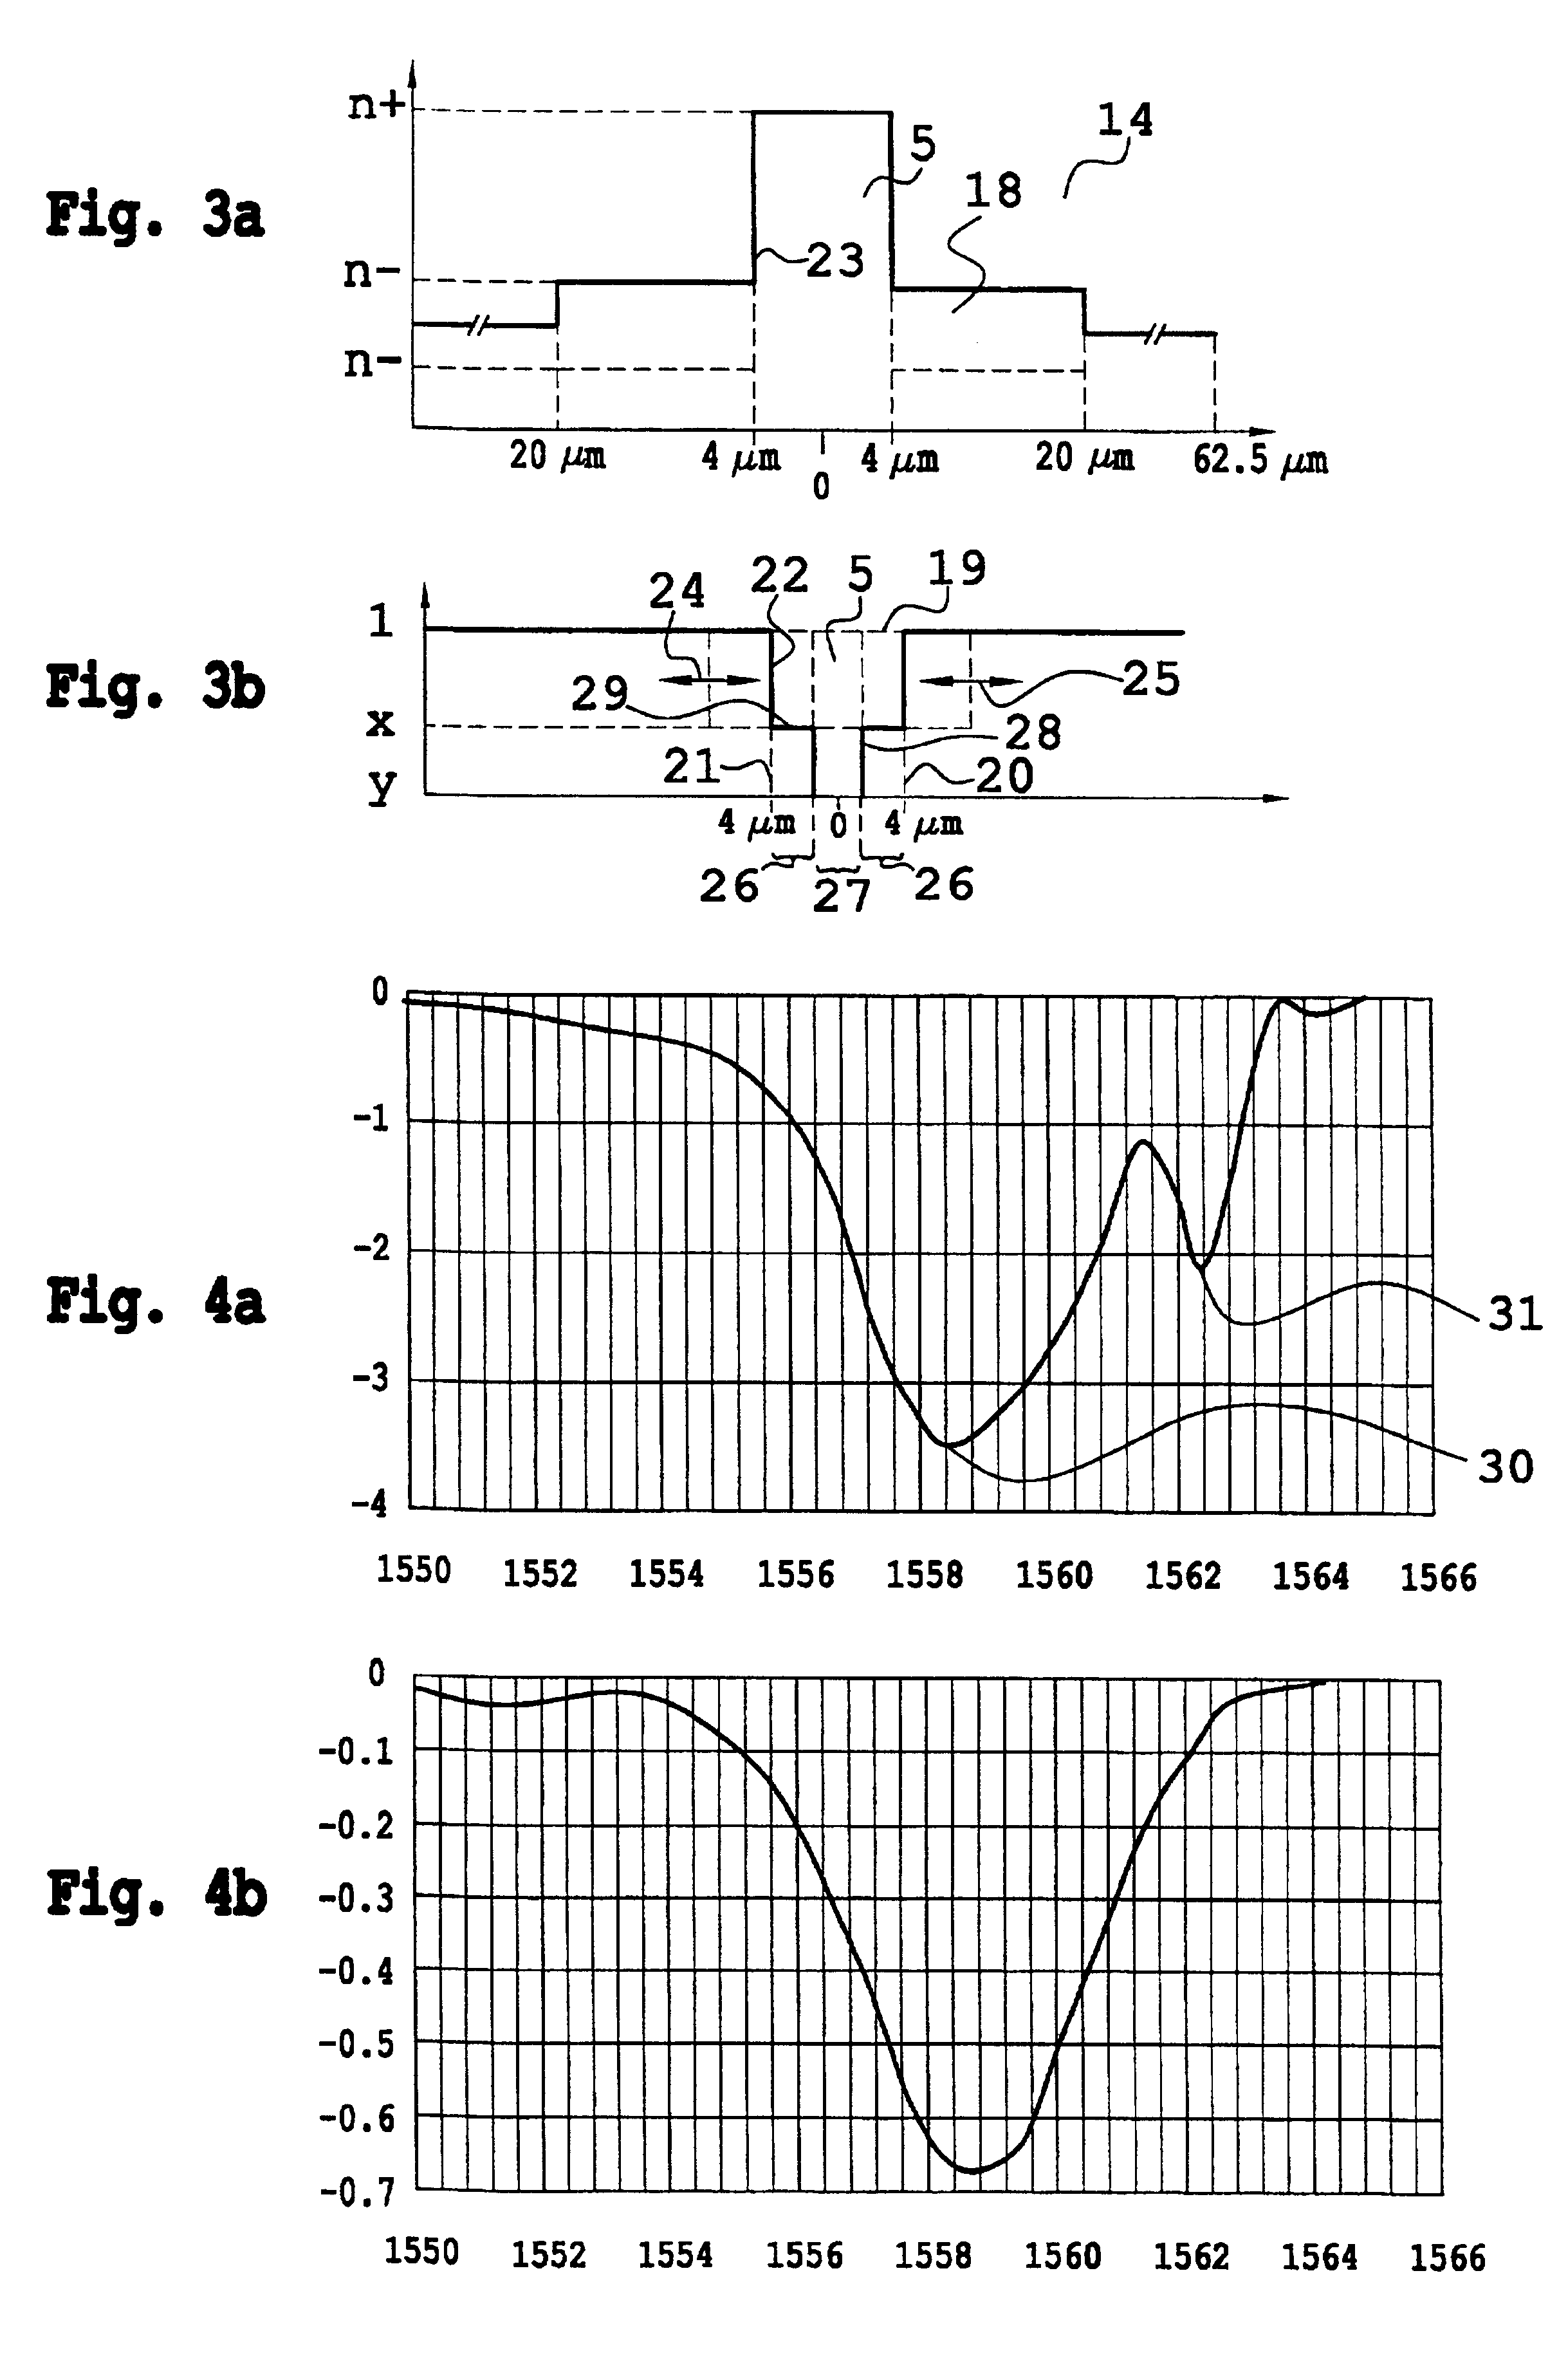 Filtering optical fiber having a modified photosensitivity profile